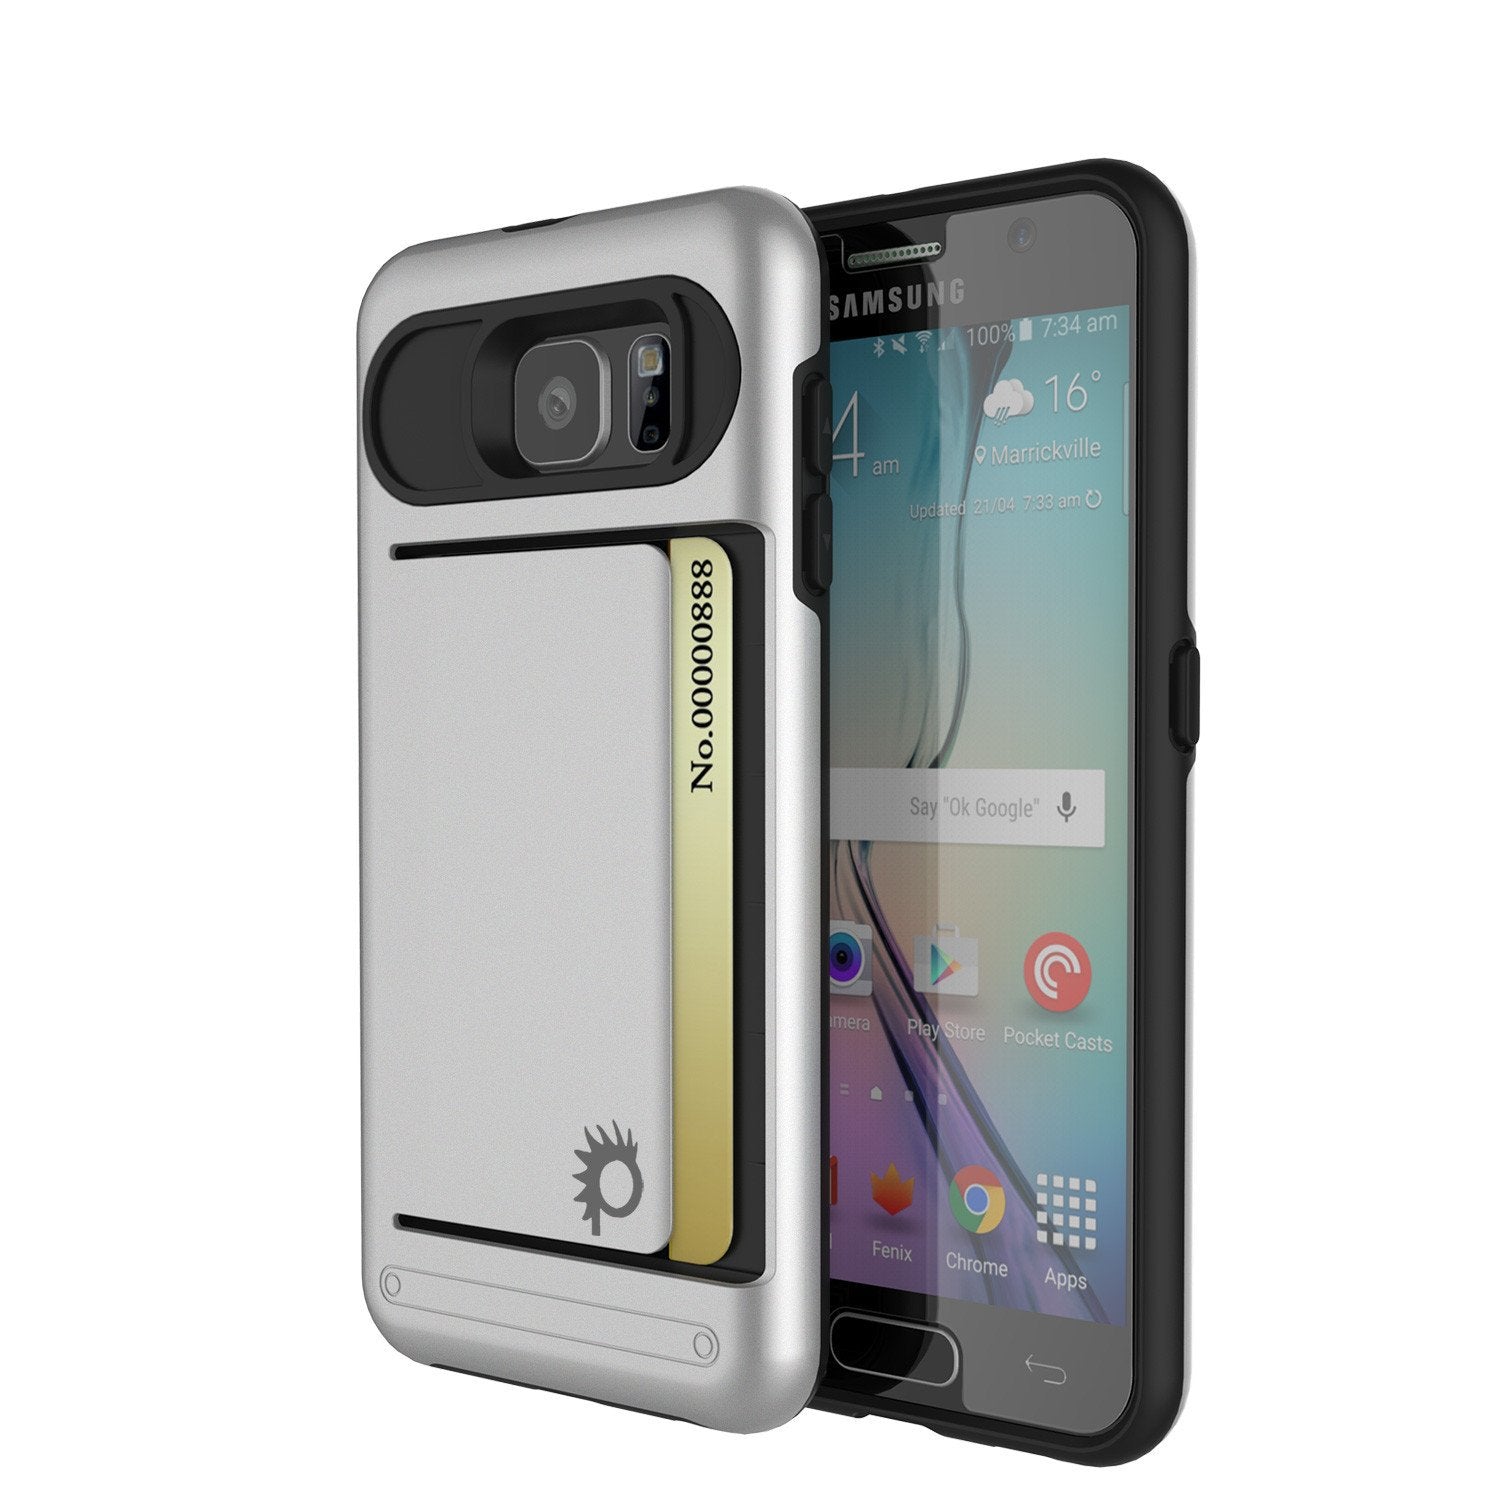 Galaxy S6 EDGE Plus Case PunkCase CLUTCH Silver Series Slim Armor Soft Cover w/ Screen Protector